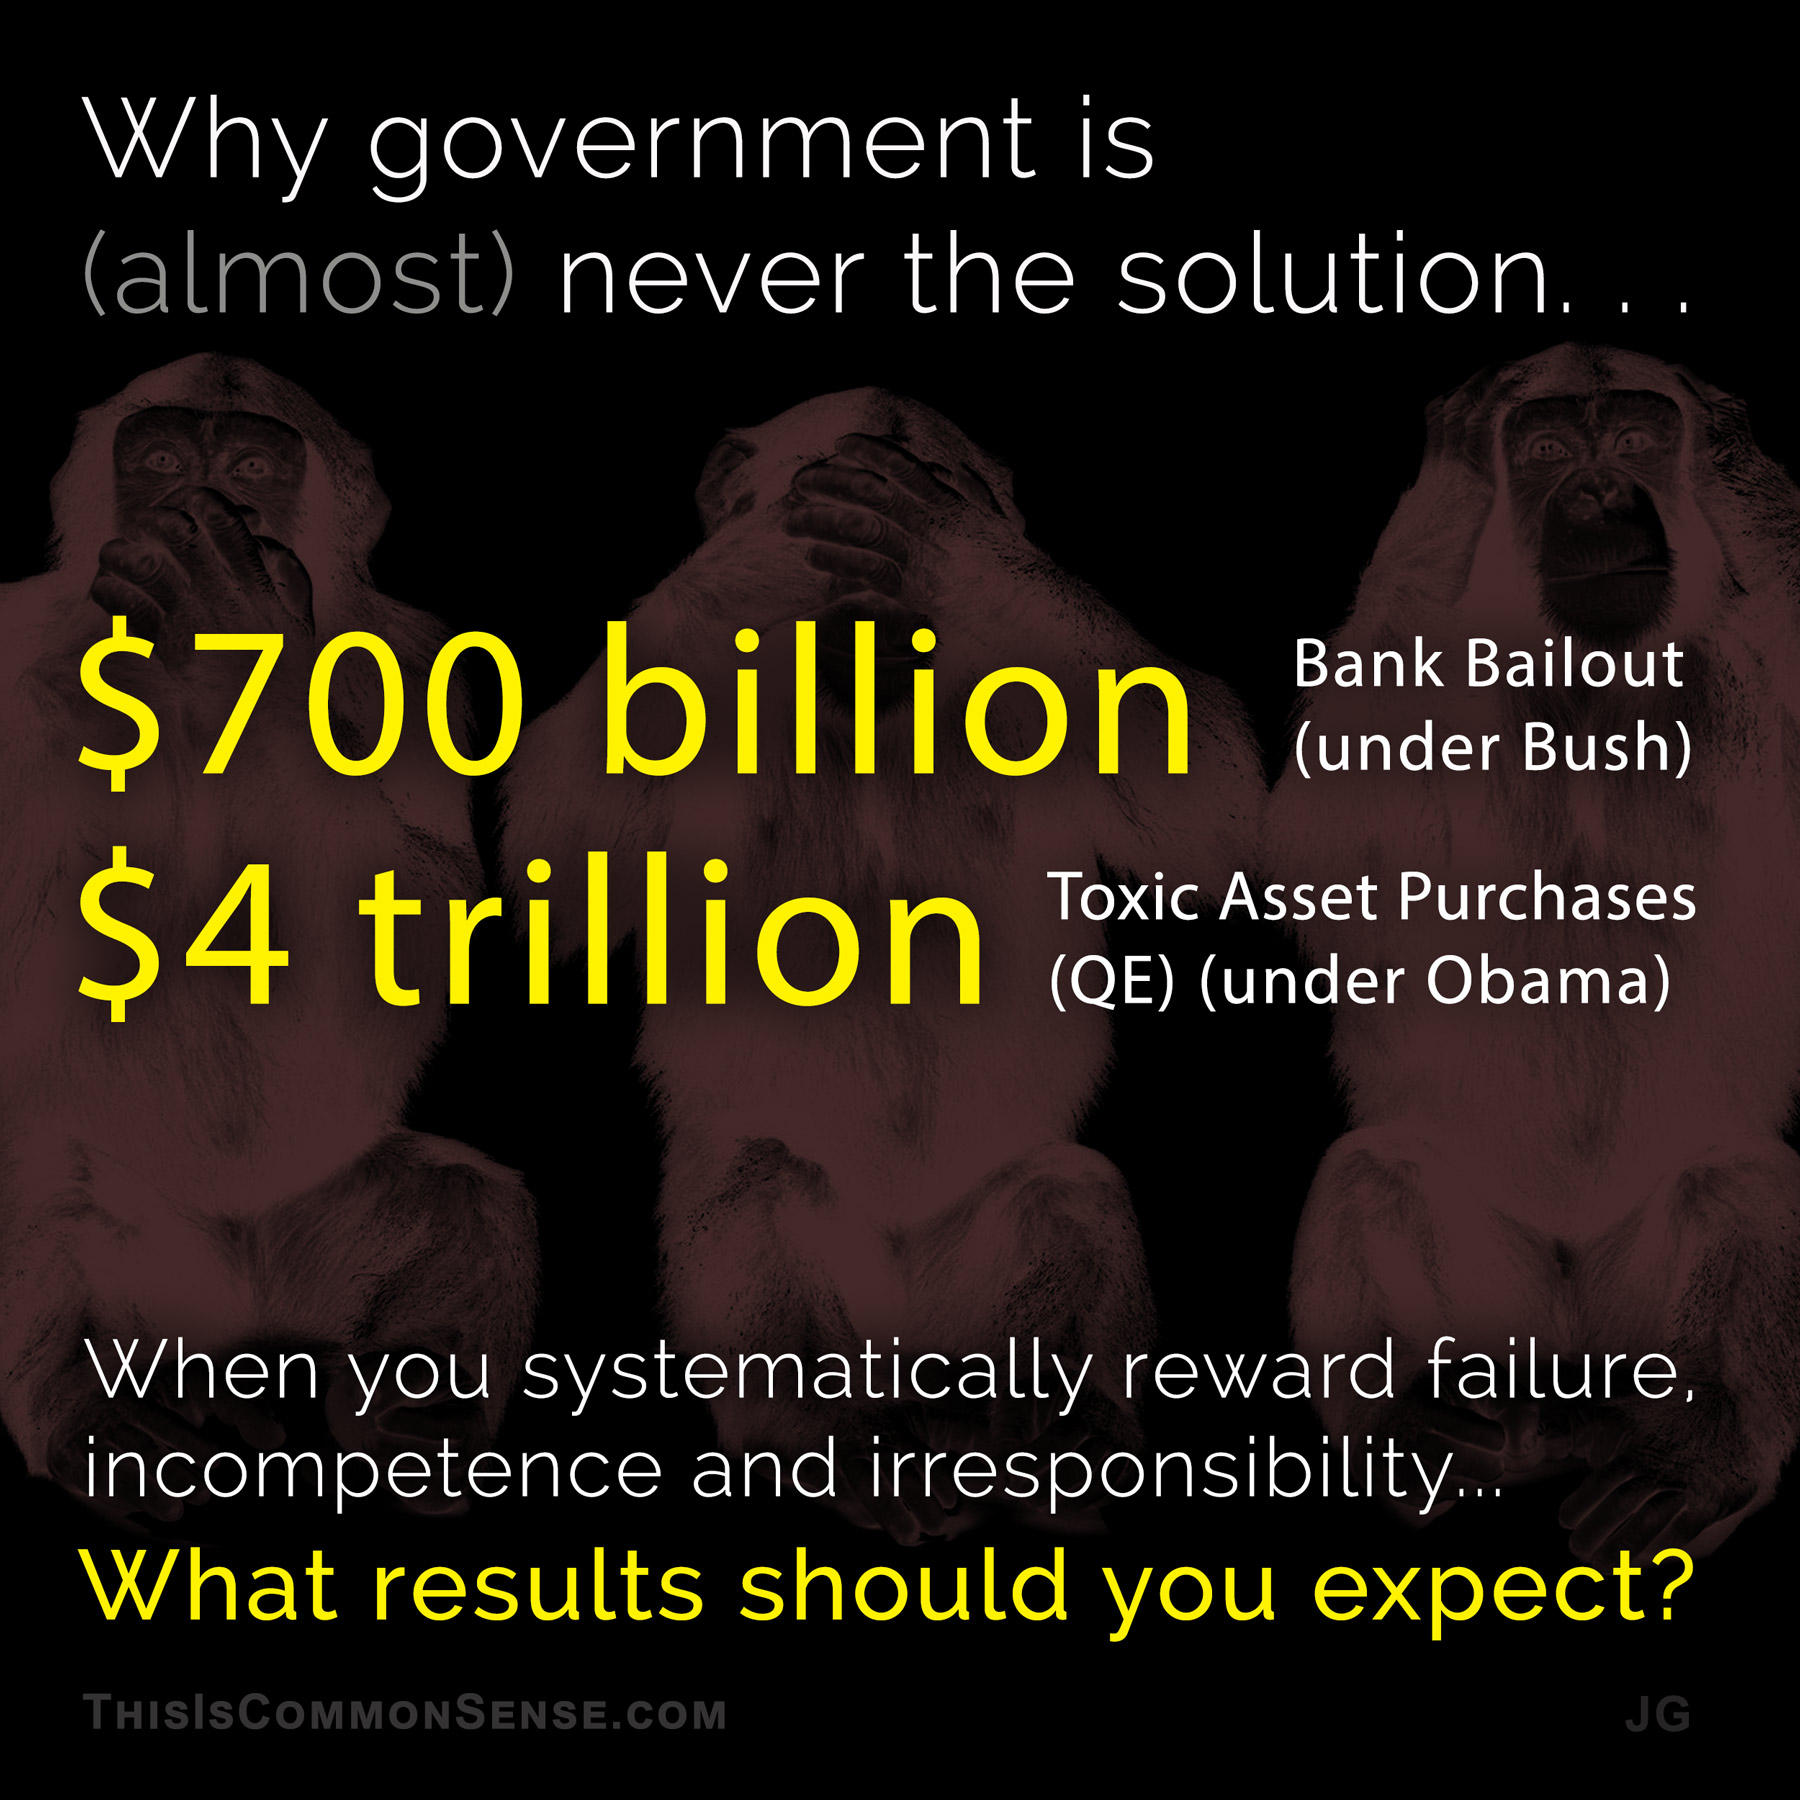 big government, solutions, toxic assets, bank bailout, meme, illustration, Jim Gill, Paul Jacob, Common Sense